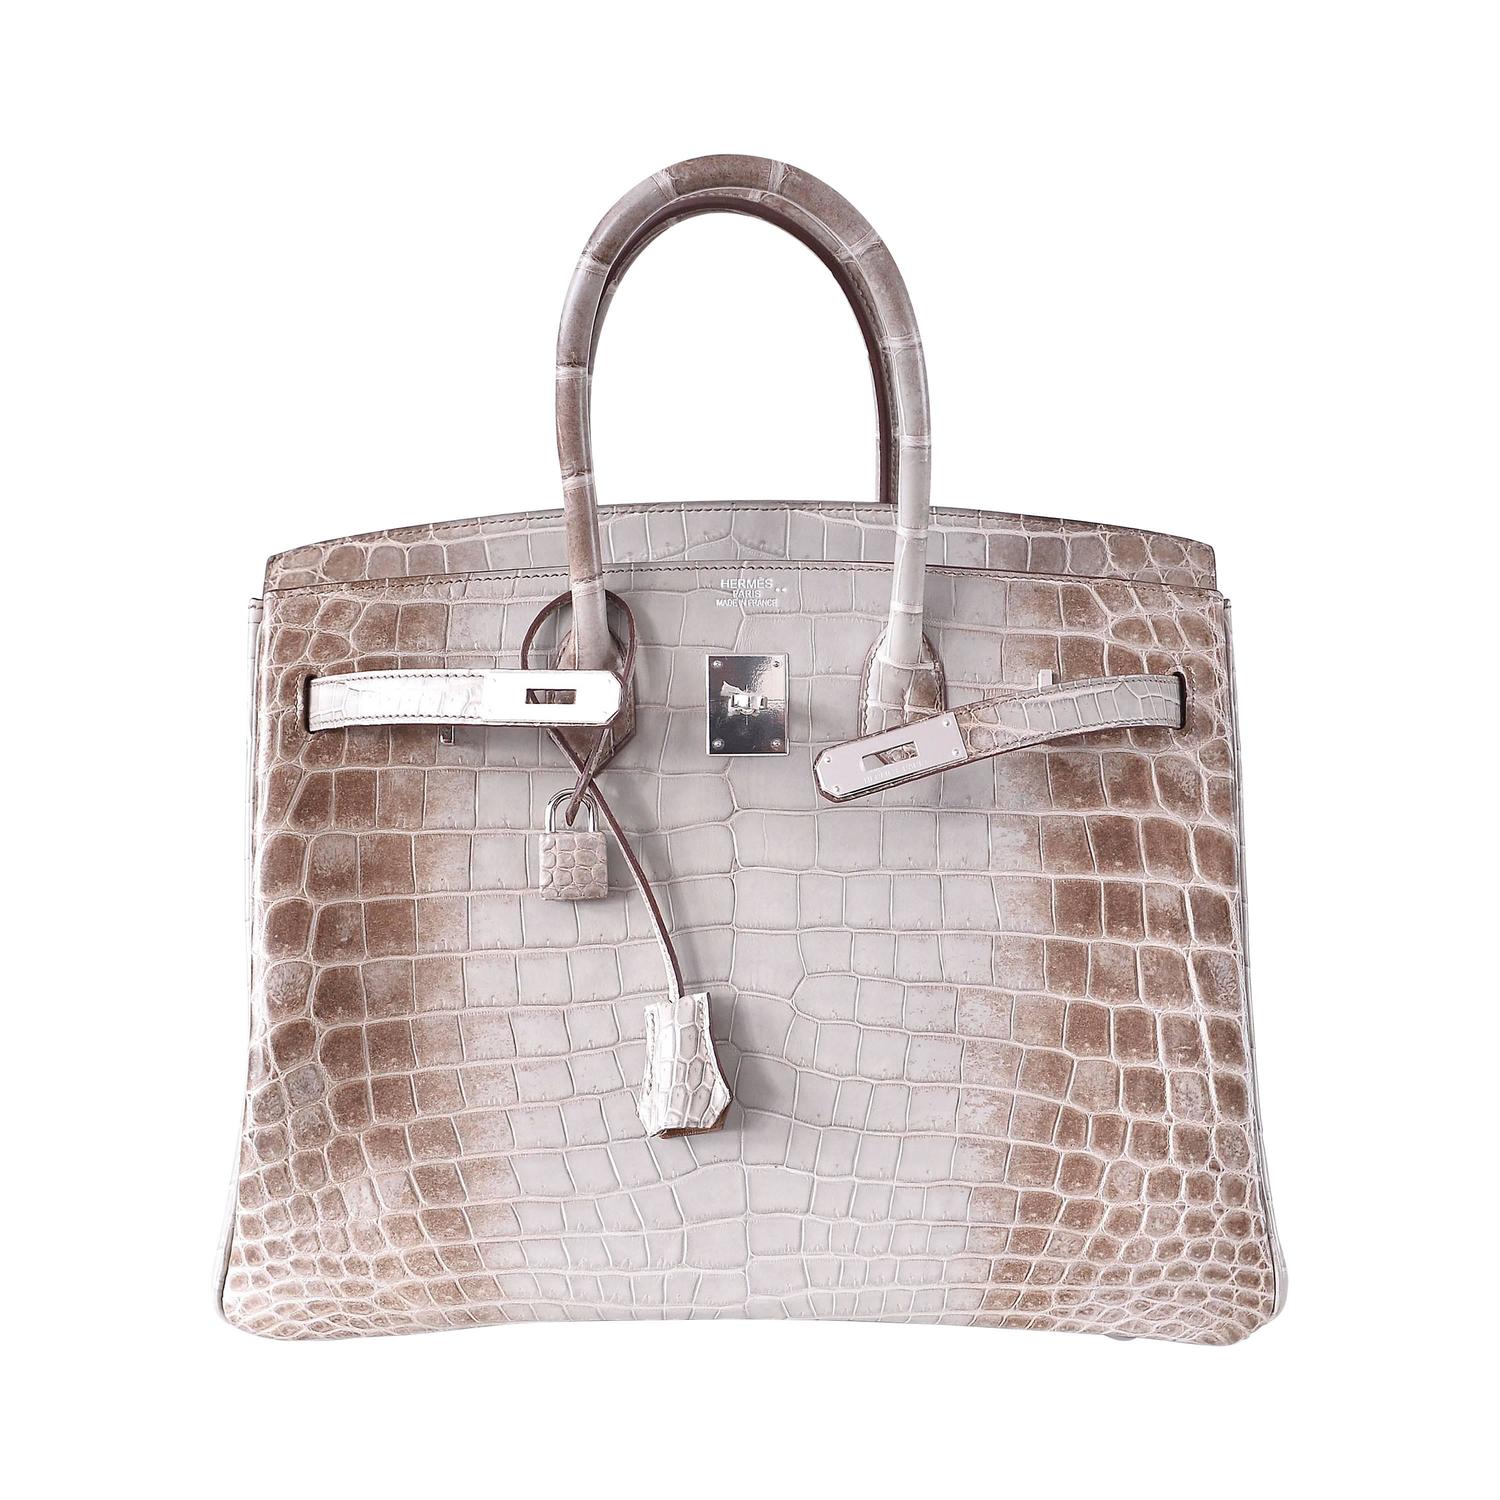 hermes himalayan nilo crocodile 35cm birkin bag limited edition janefinds, birkin handbags price